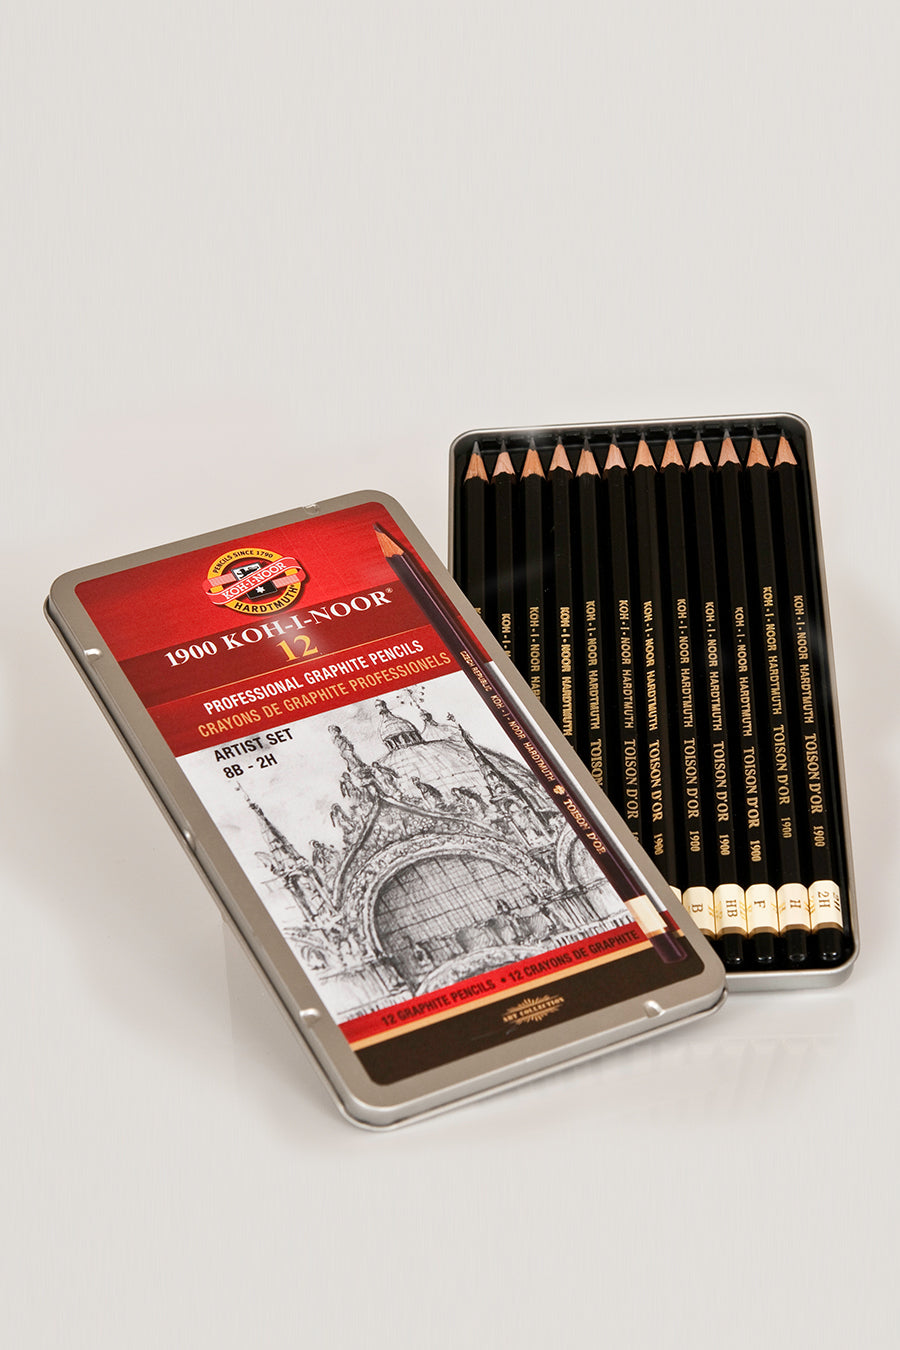 Koh-I-Noor : Toison D'Or Graphite Pencils 1900